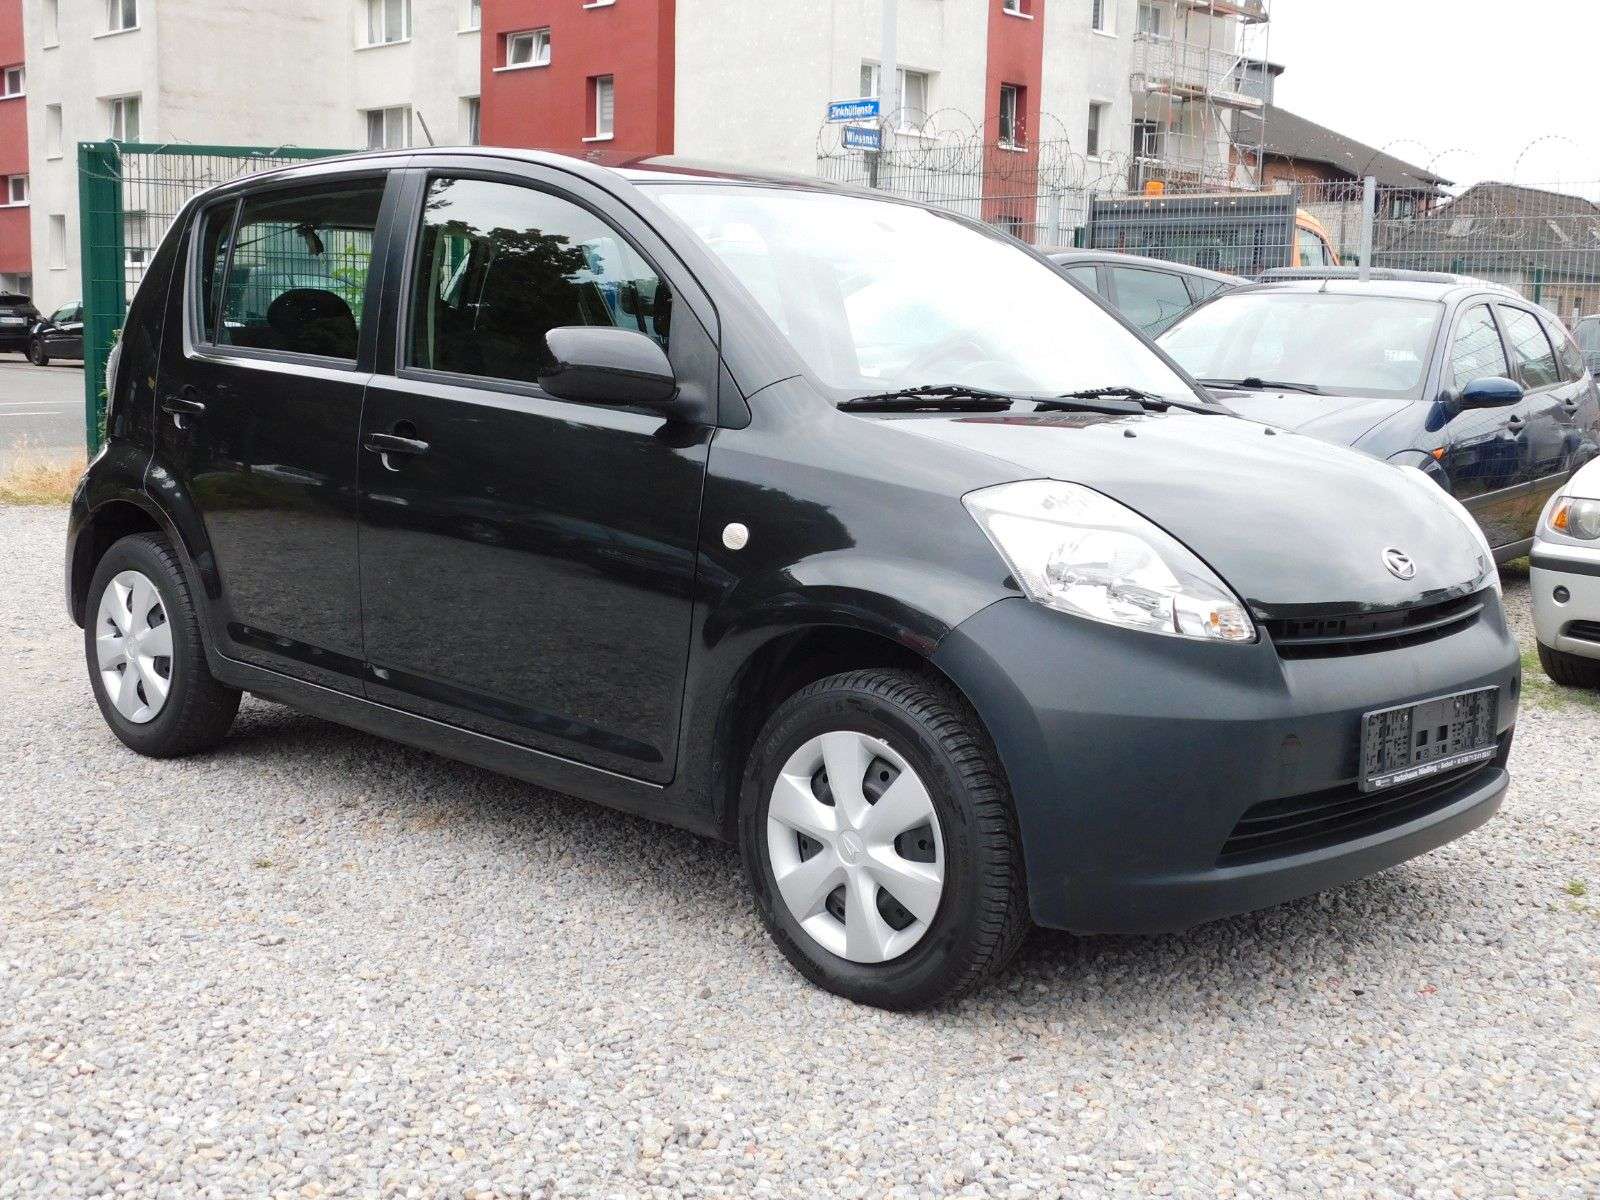 Daihatsu Sirion Sedan in Black used in Mülheim an der Ruhr for € 2,799.-